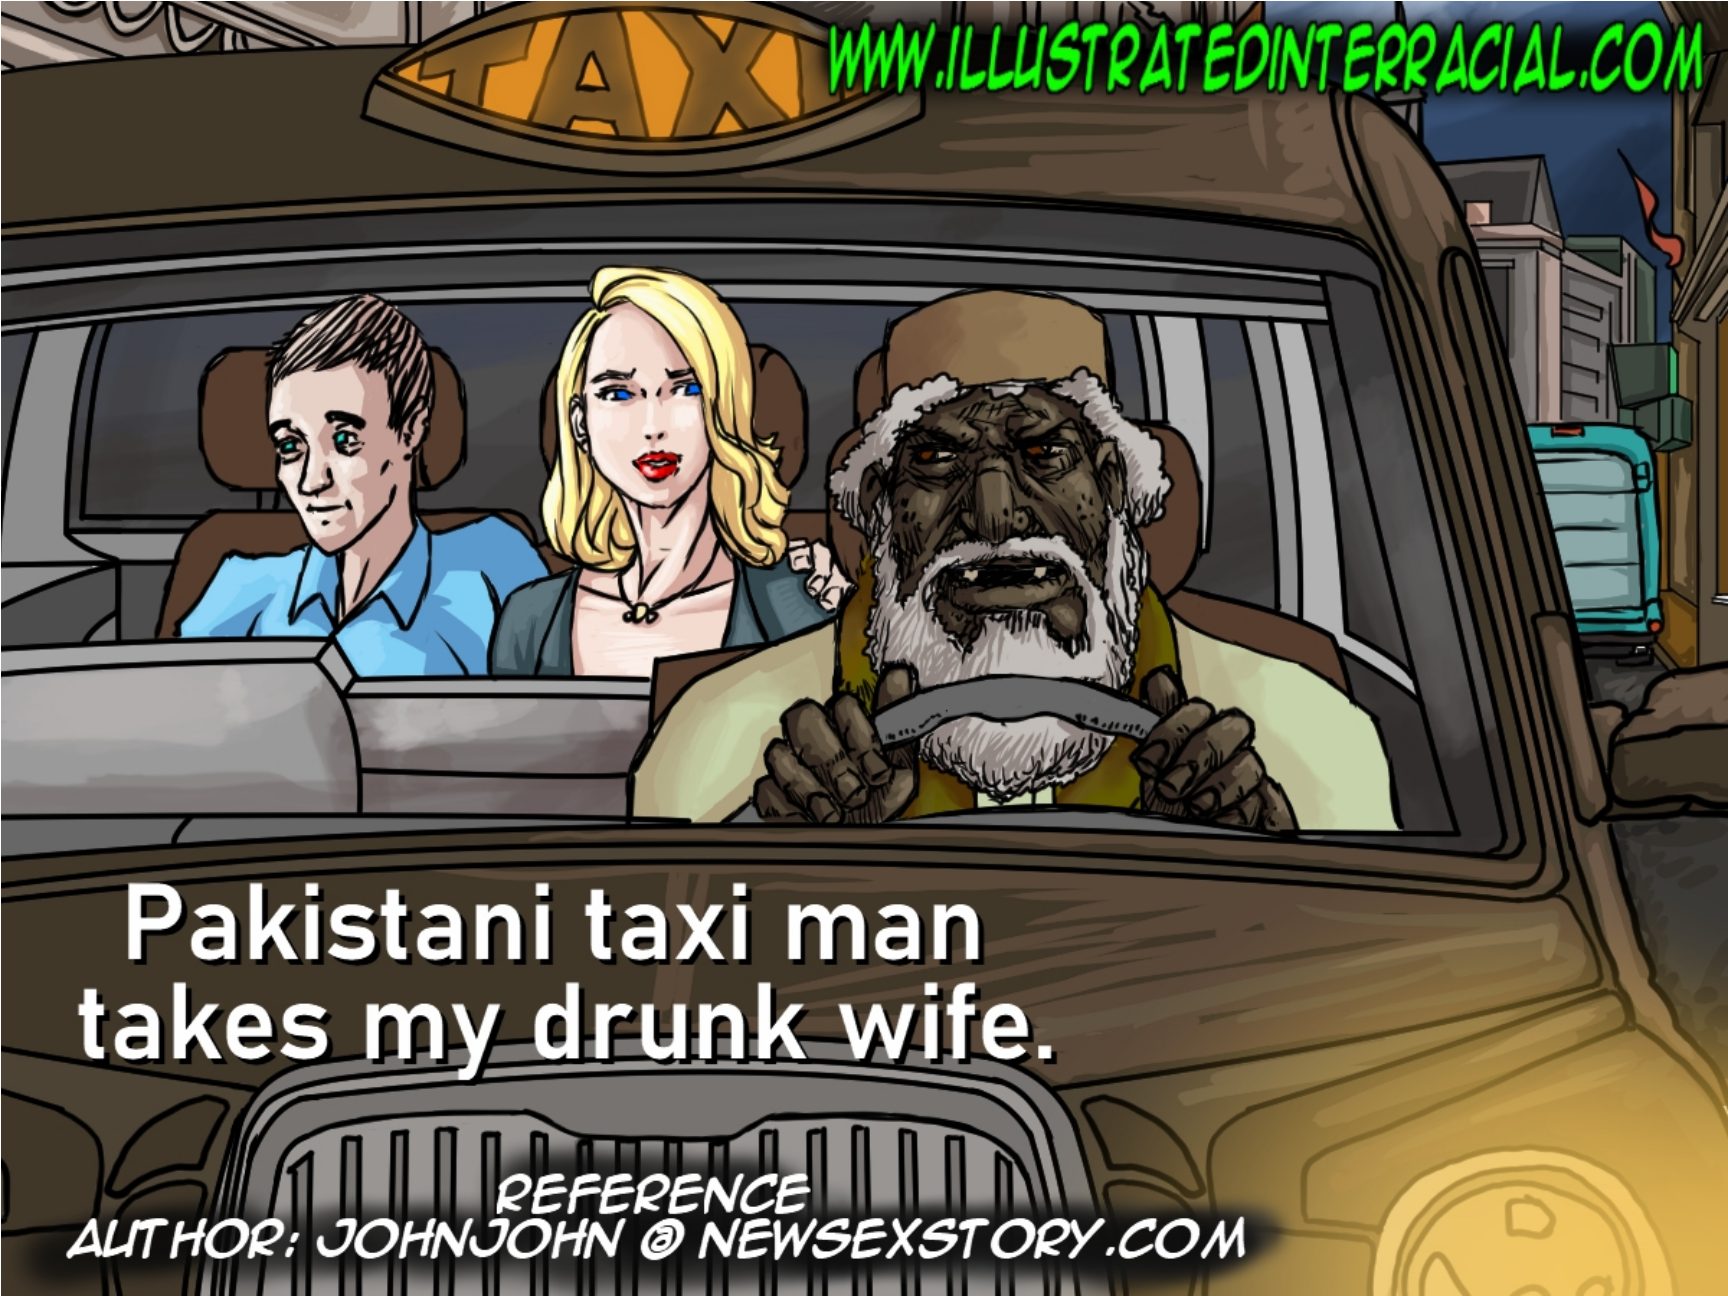 Pakastani Taxi Man - illustratedinterracial photo